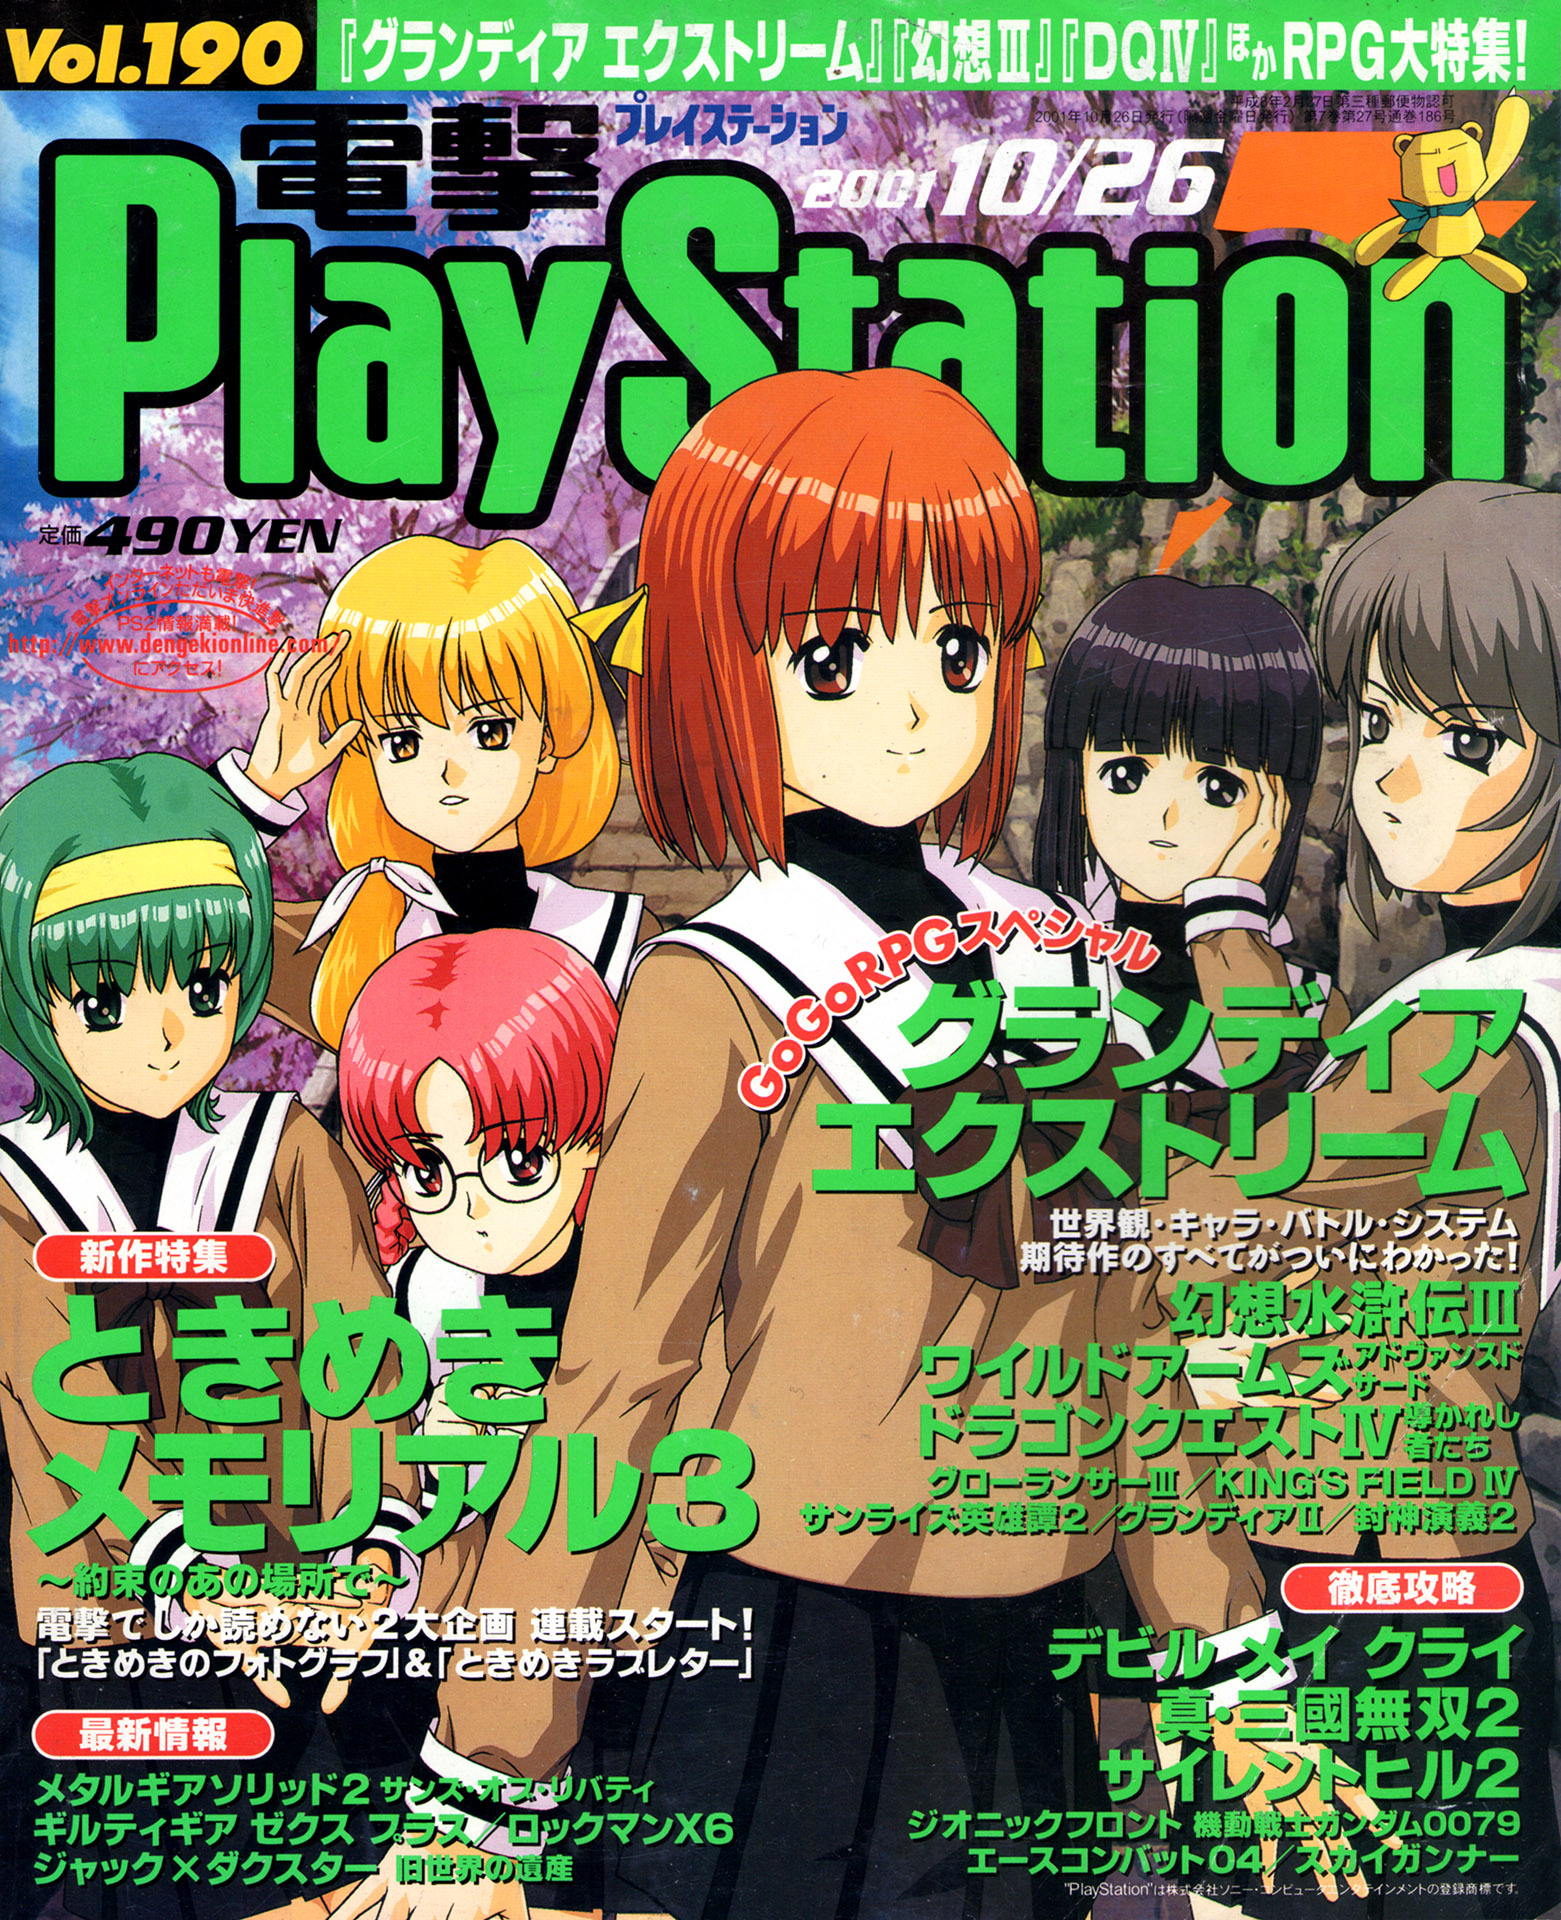 Dengeki Playstation 190 October 26 01 Dengeki Playstation Retromags Community